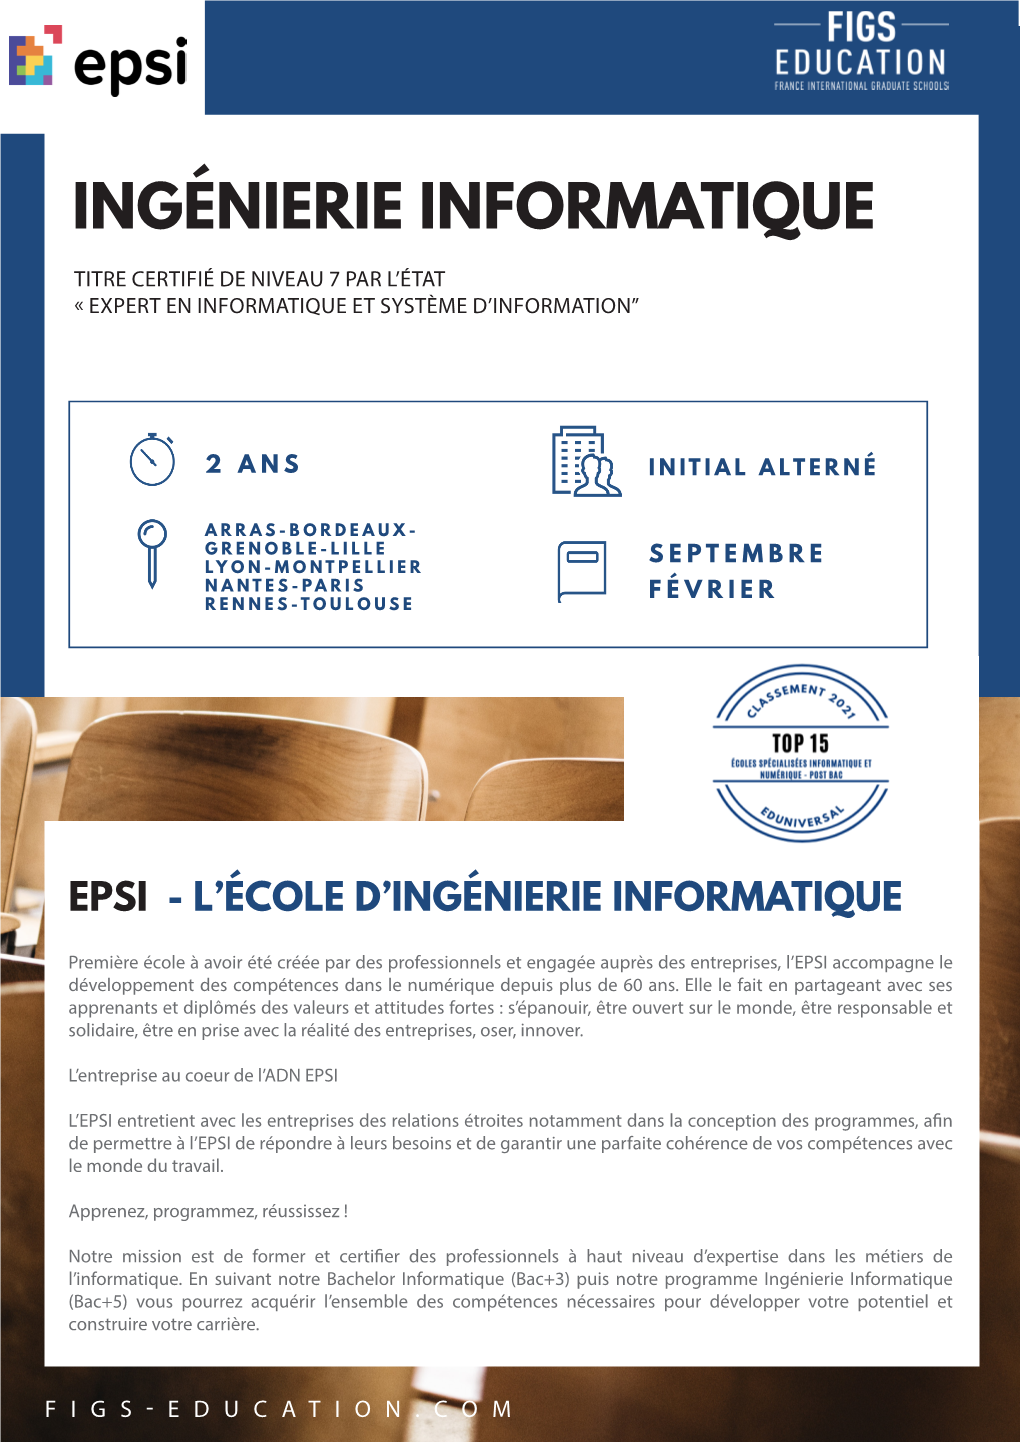 EPSI Ingénierie Informatique